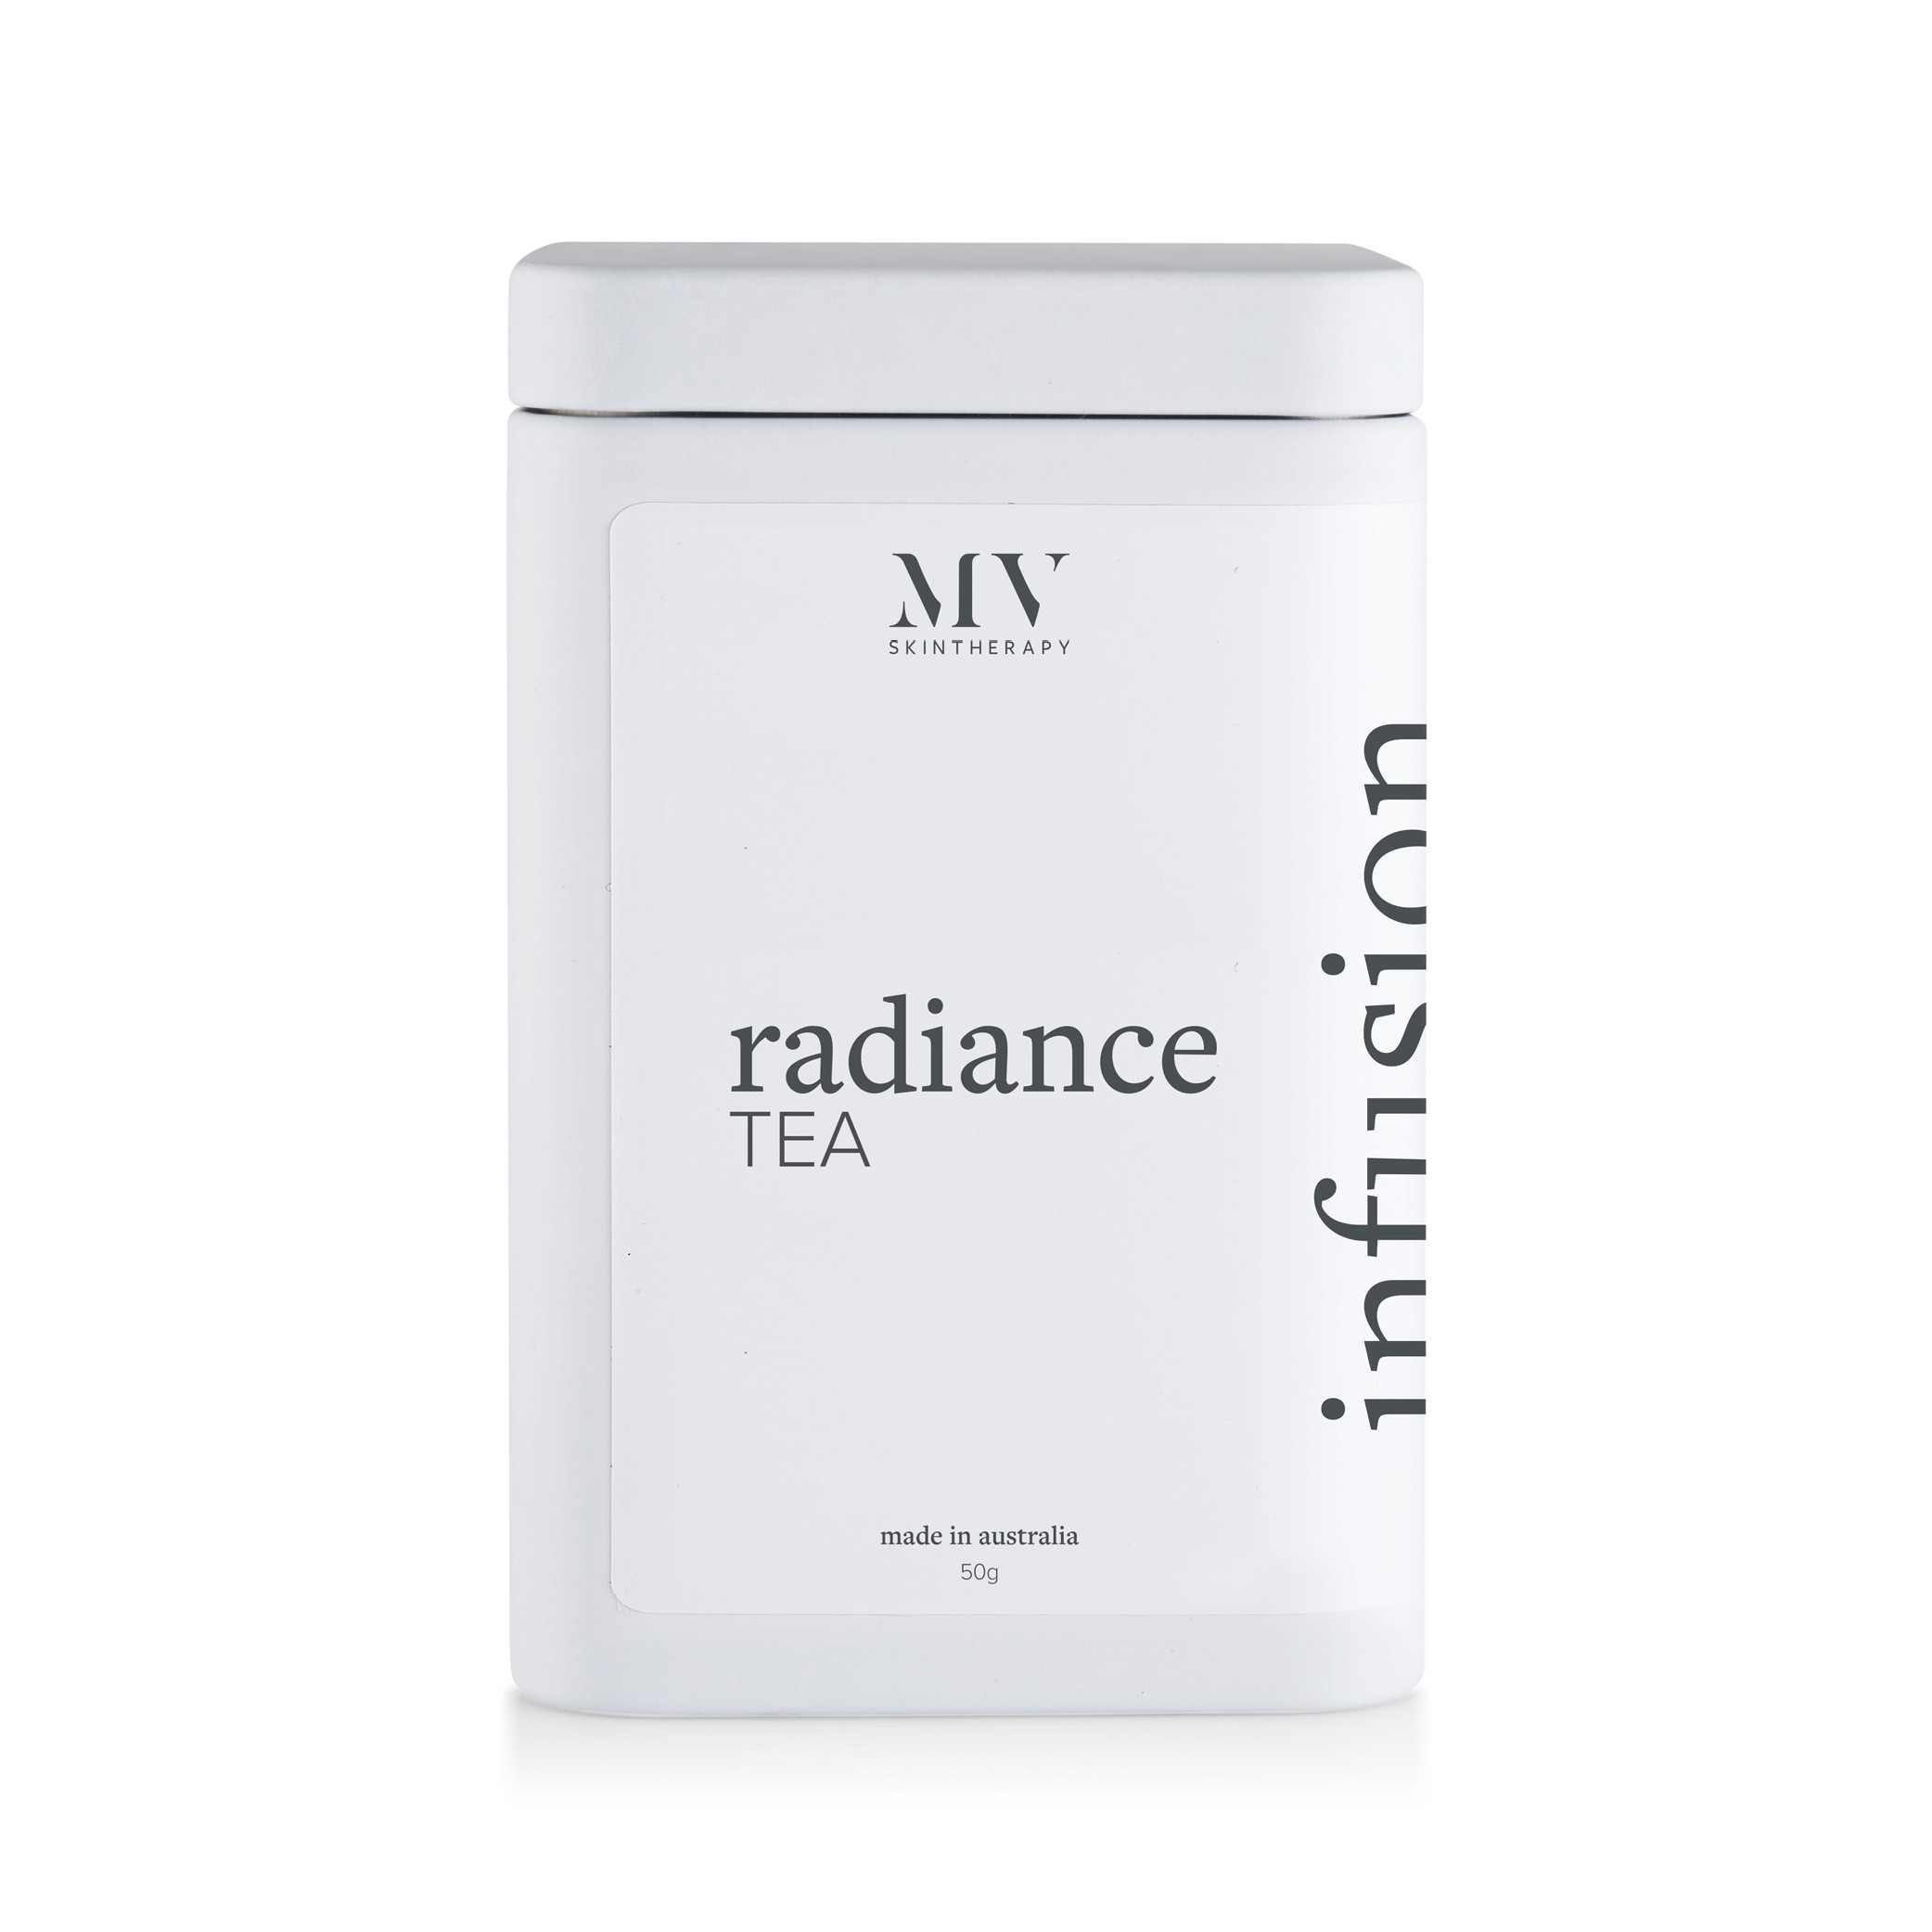 MV Radiance Tea - Vita Nuova Beauty & Wellness